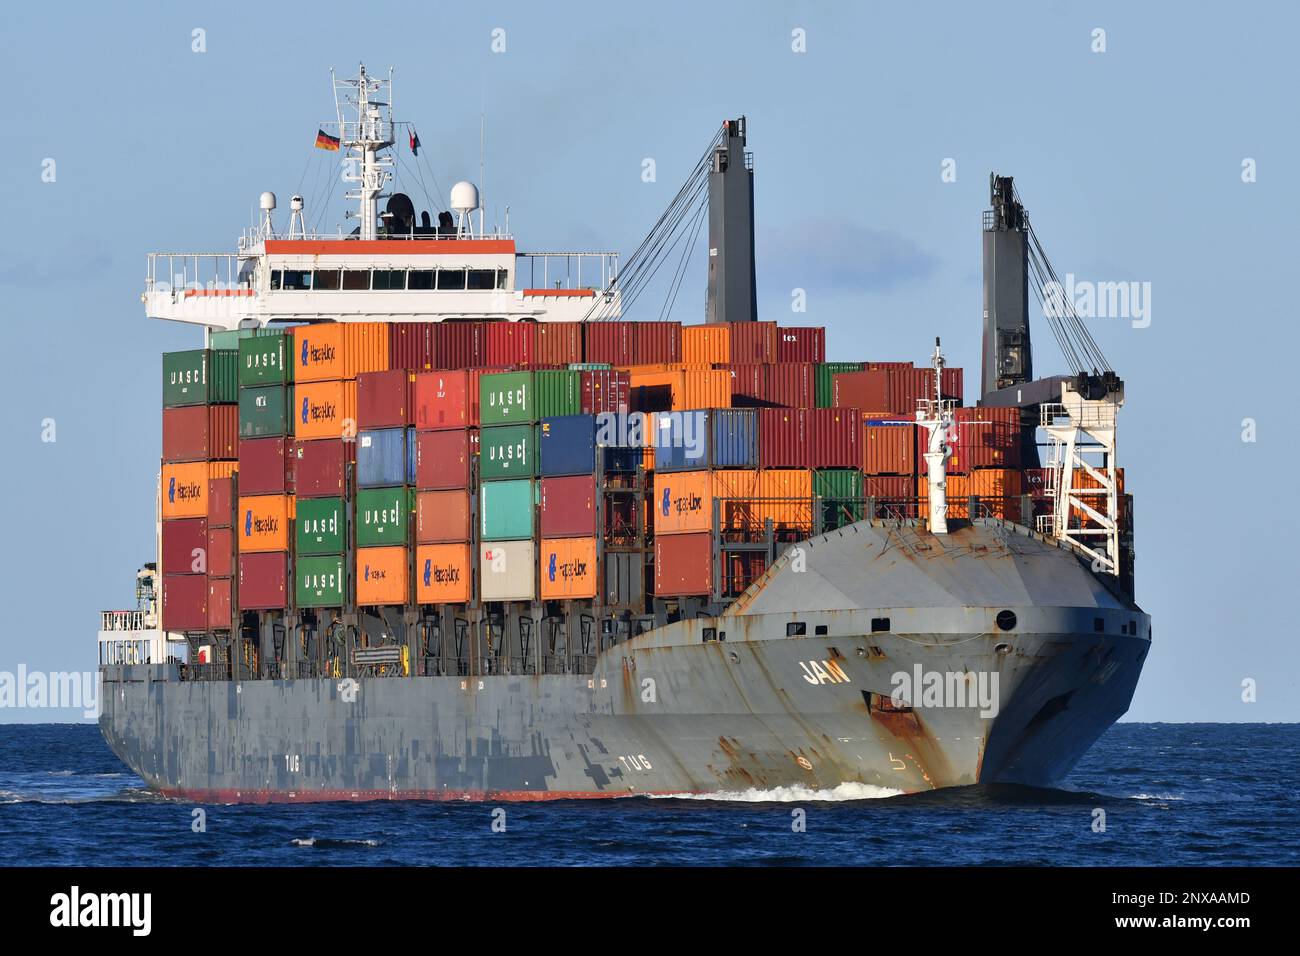 Containership JAN at the Kiel Fjord Stock Photo